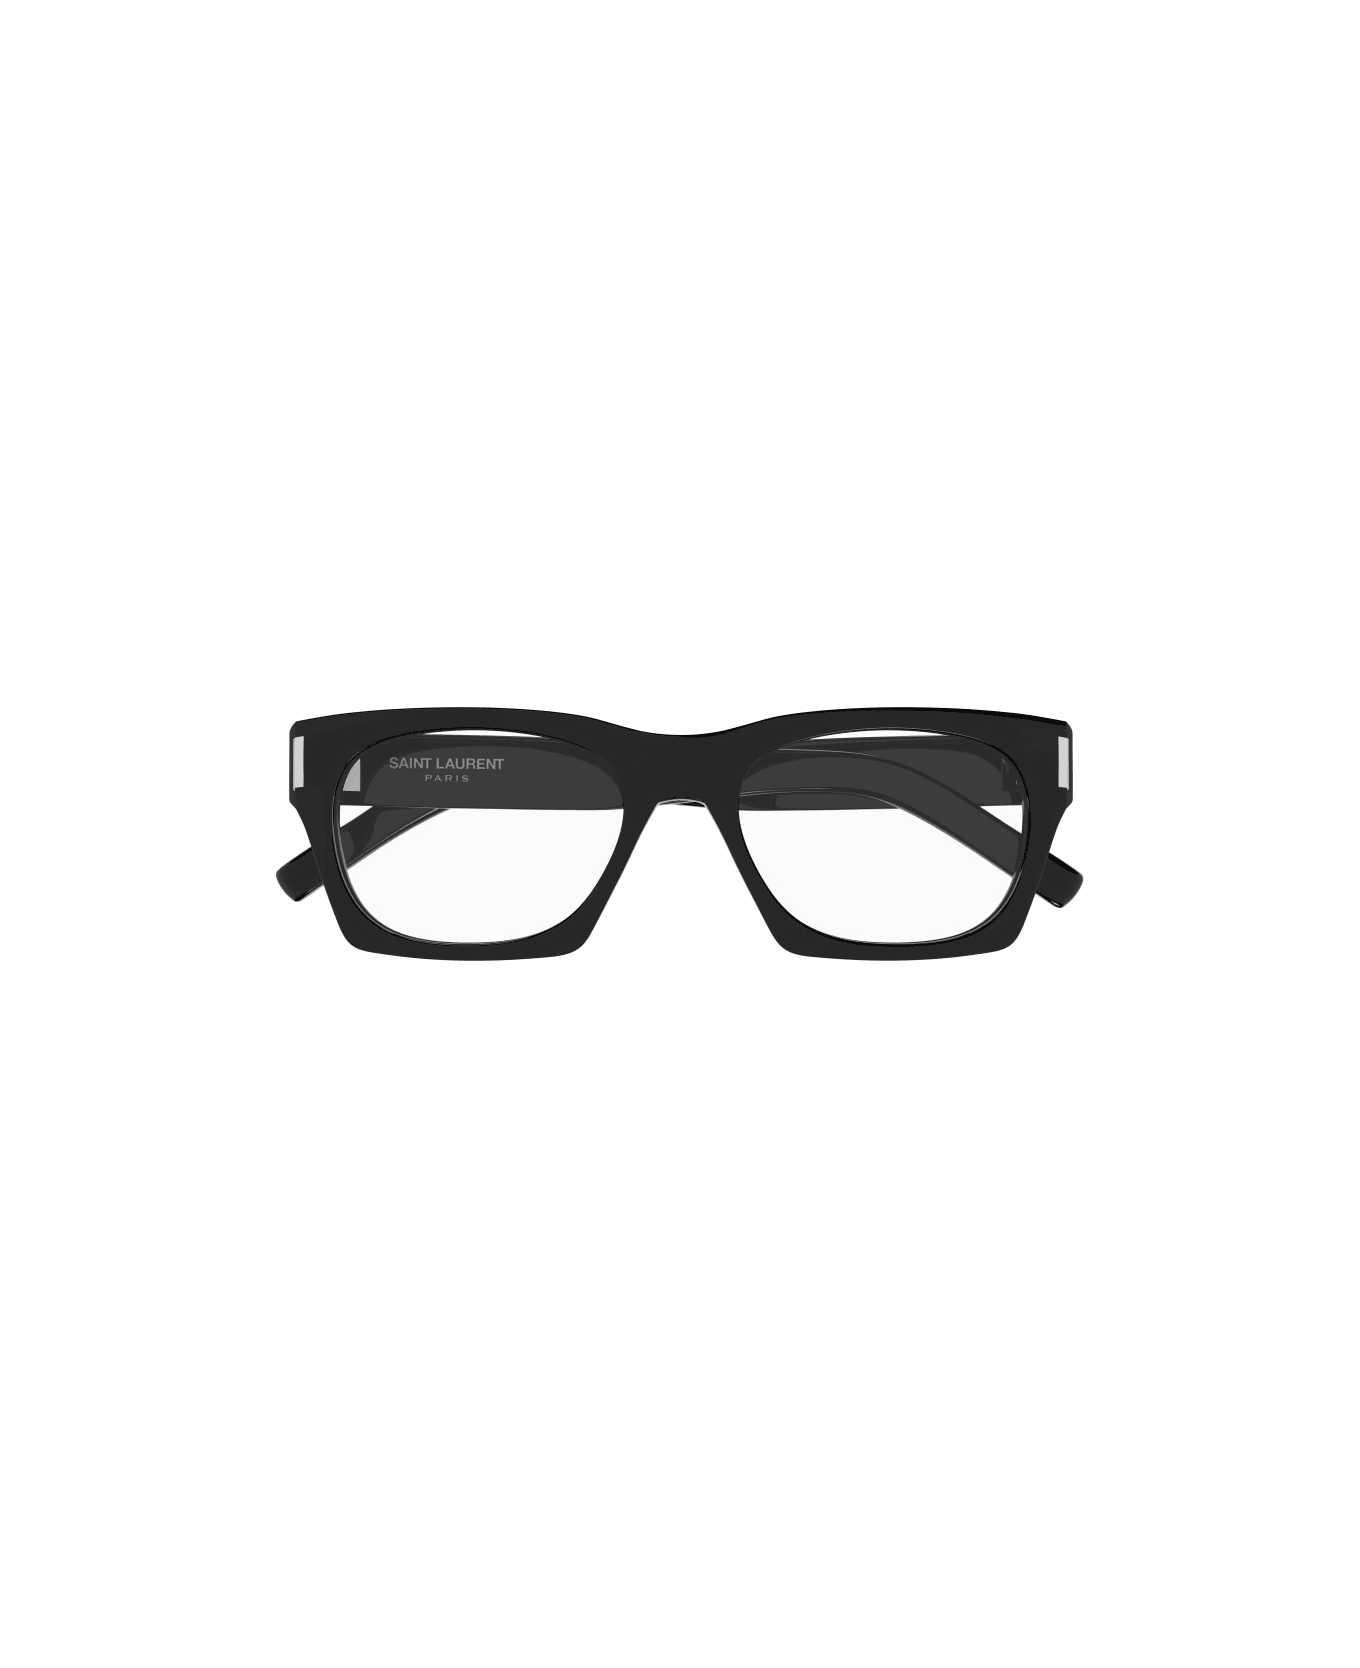 Saint Laurent Eyewear Sl 402 Opt Eyewear - 001 black black transpare